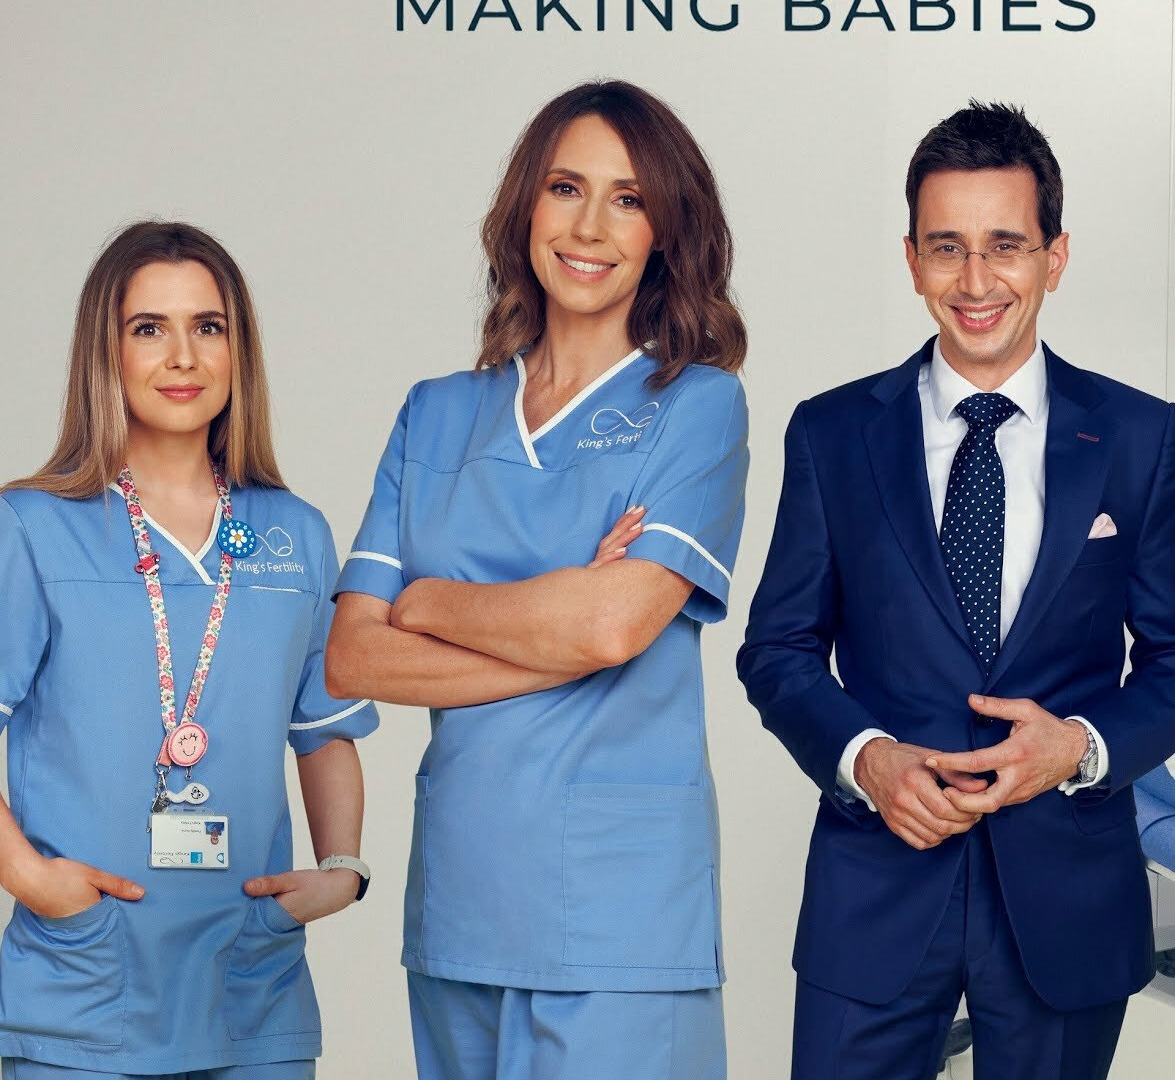 Сериал Alex Jones: Making Babies